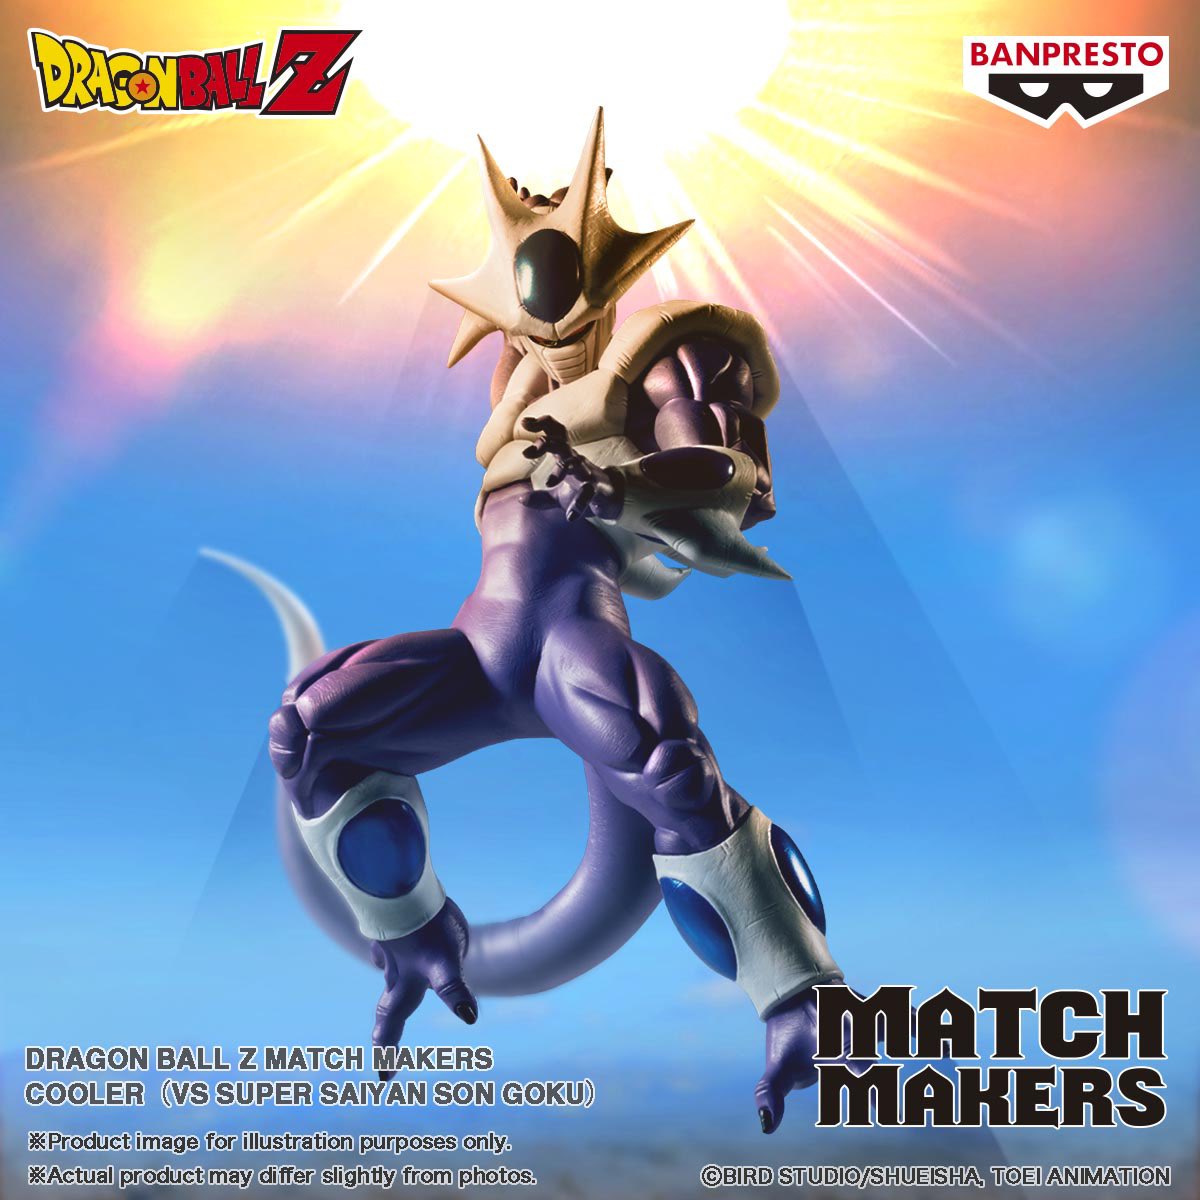 DRAGON BALL Z MATCH MAKERS - COOLER (VS SON GOKU)